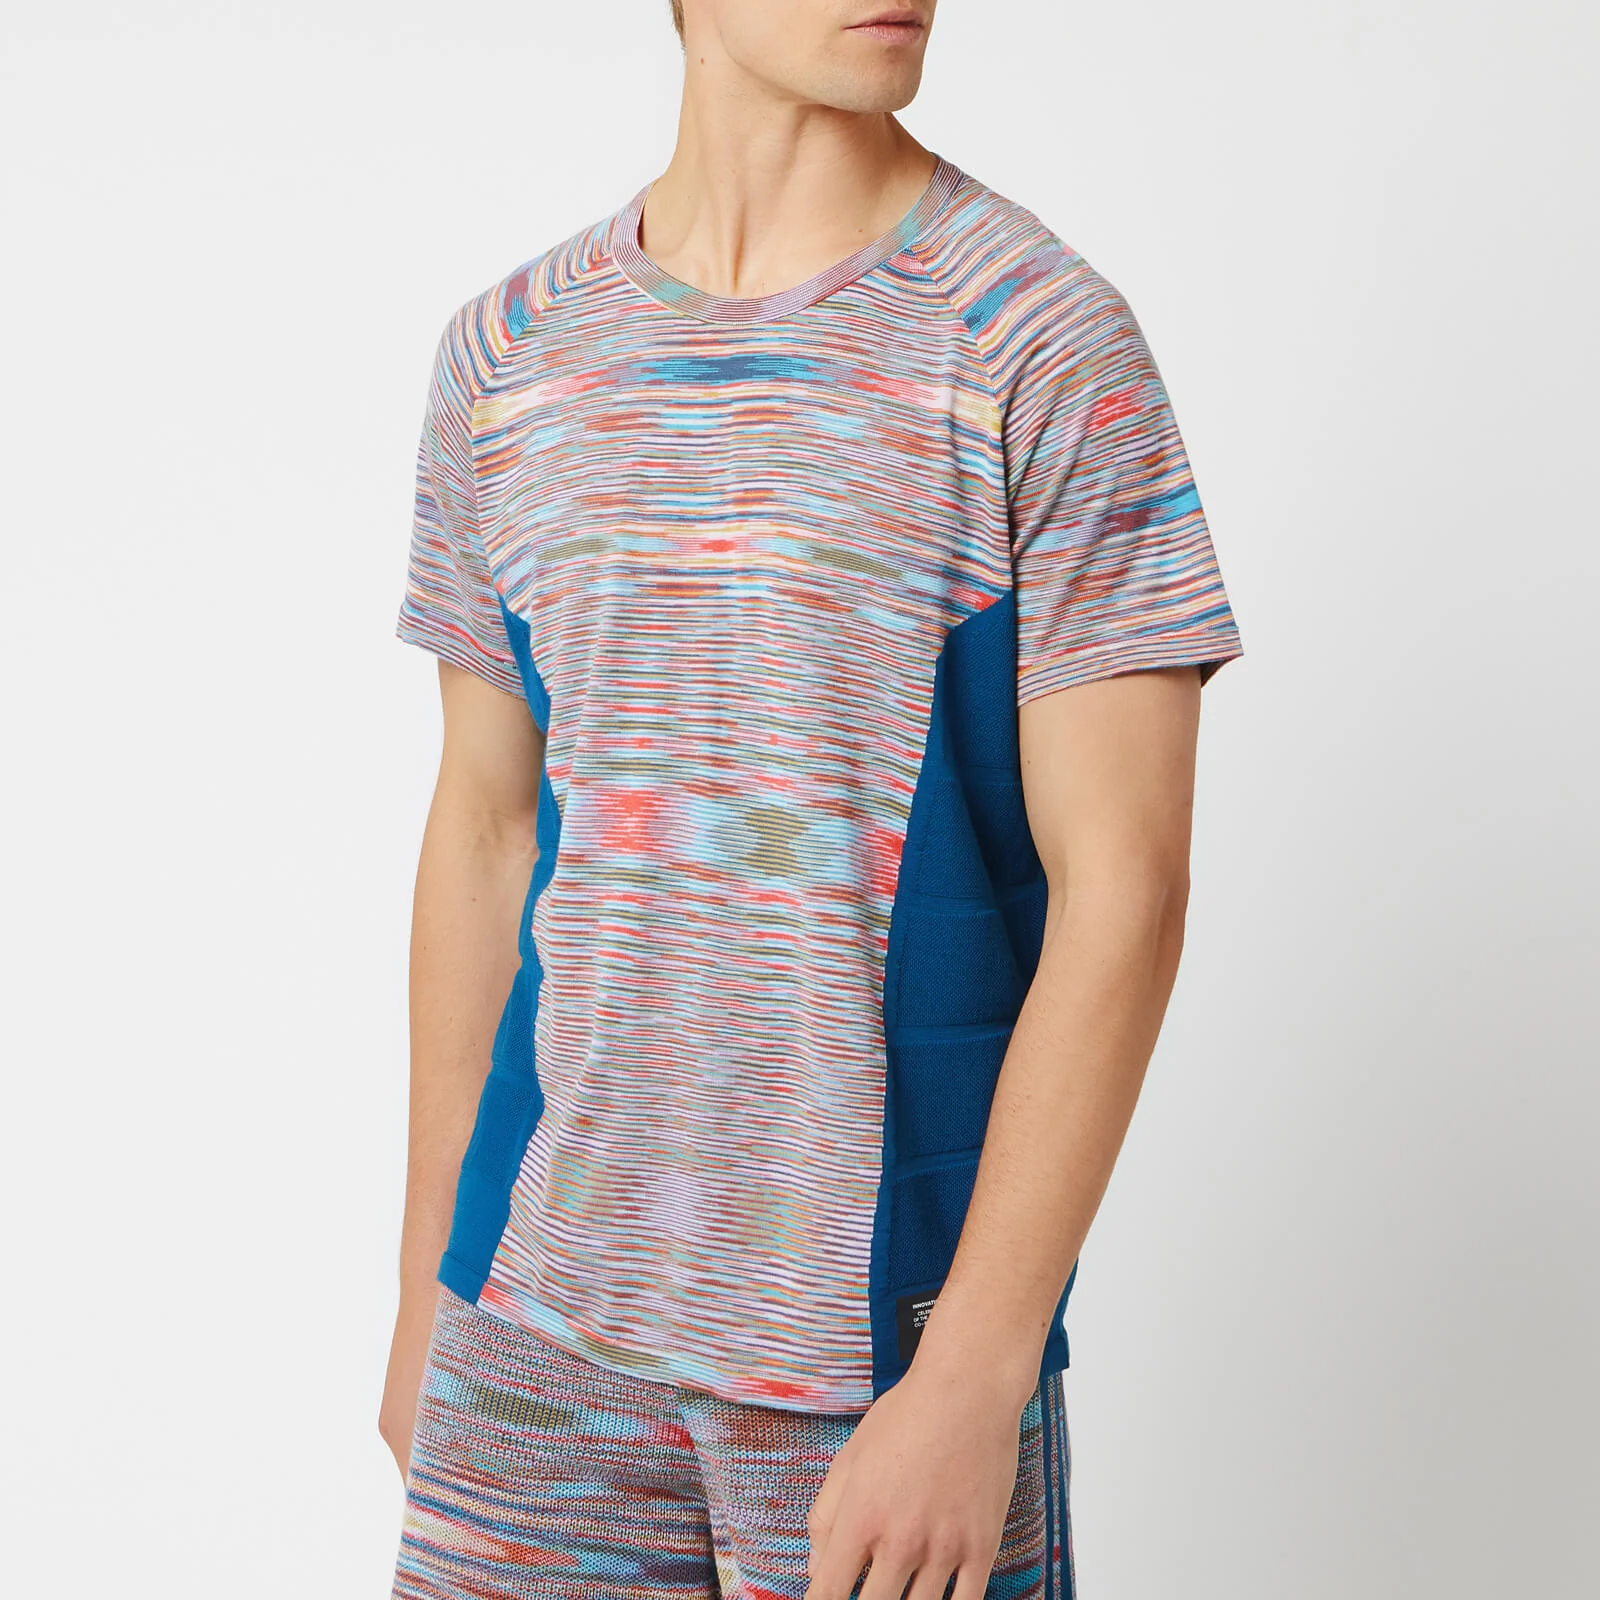 adidas X Missoni Men's Supernova Short Sleeve T-Shirt - Multicolour Image 1